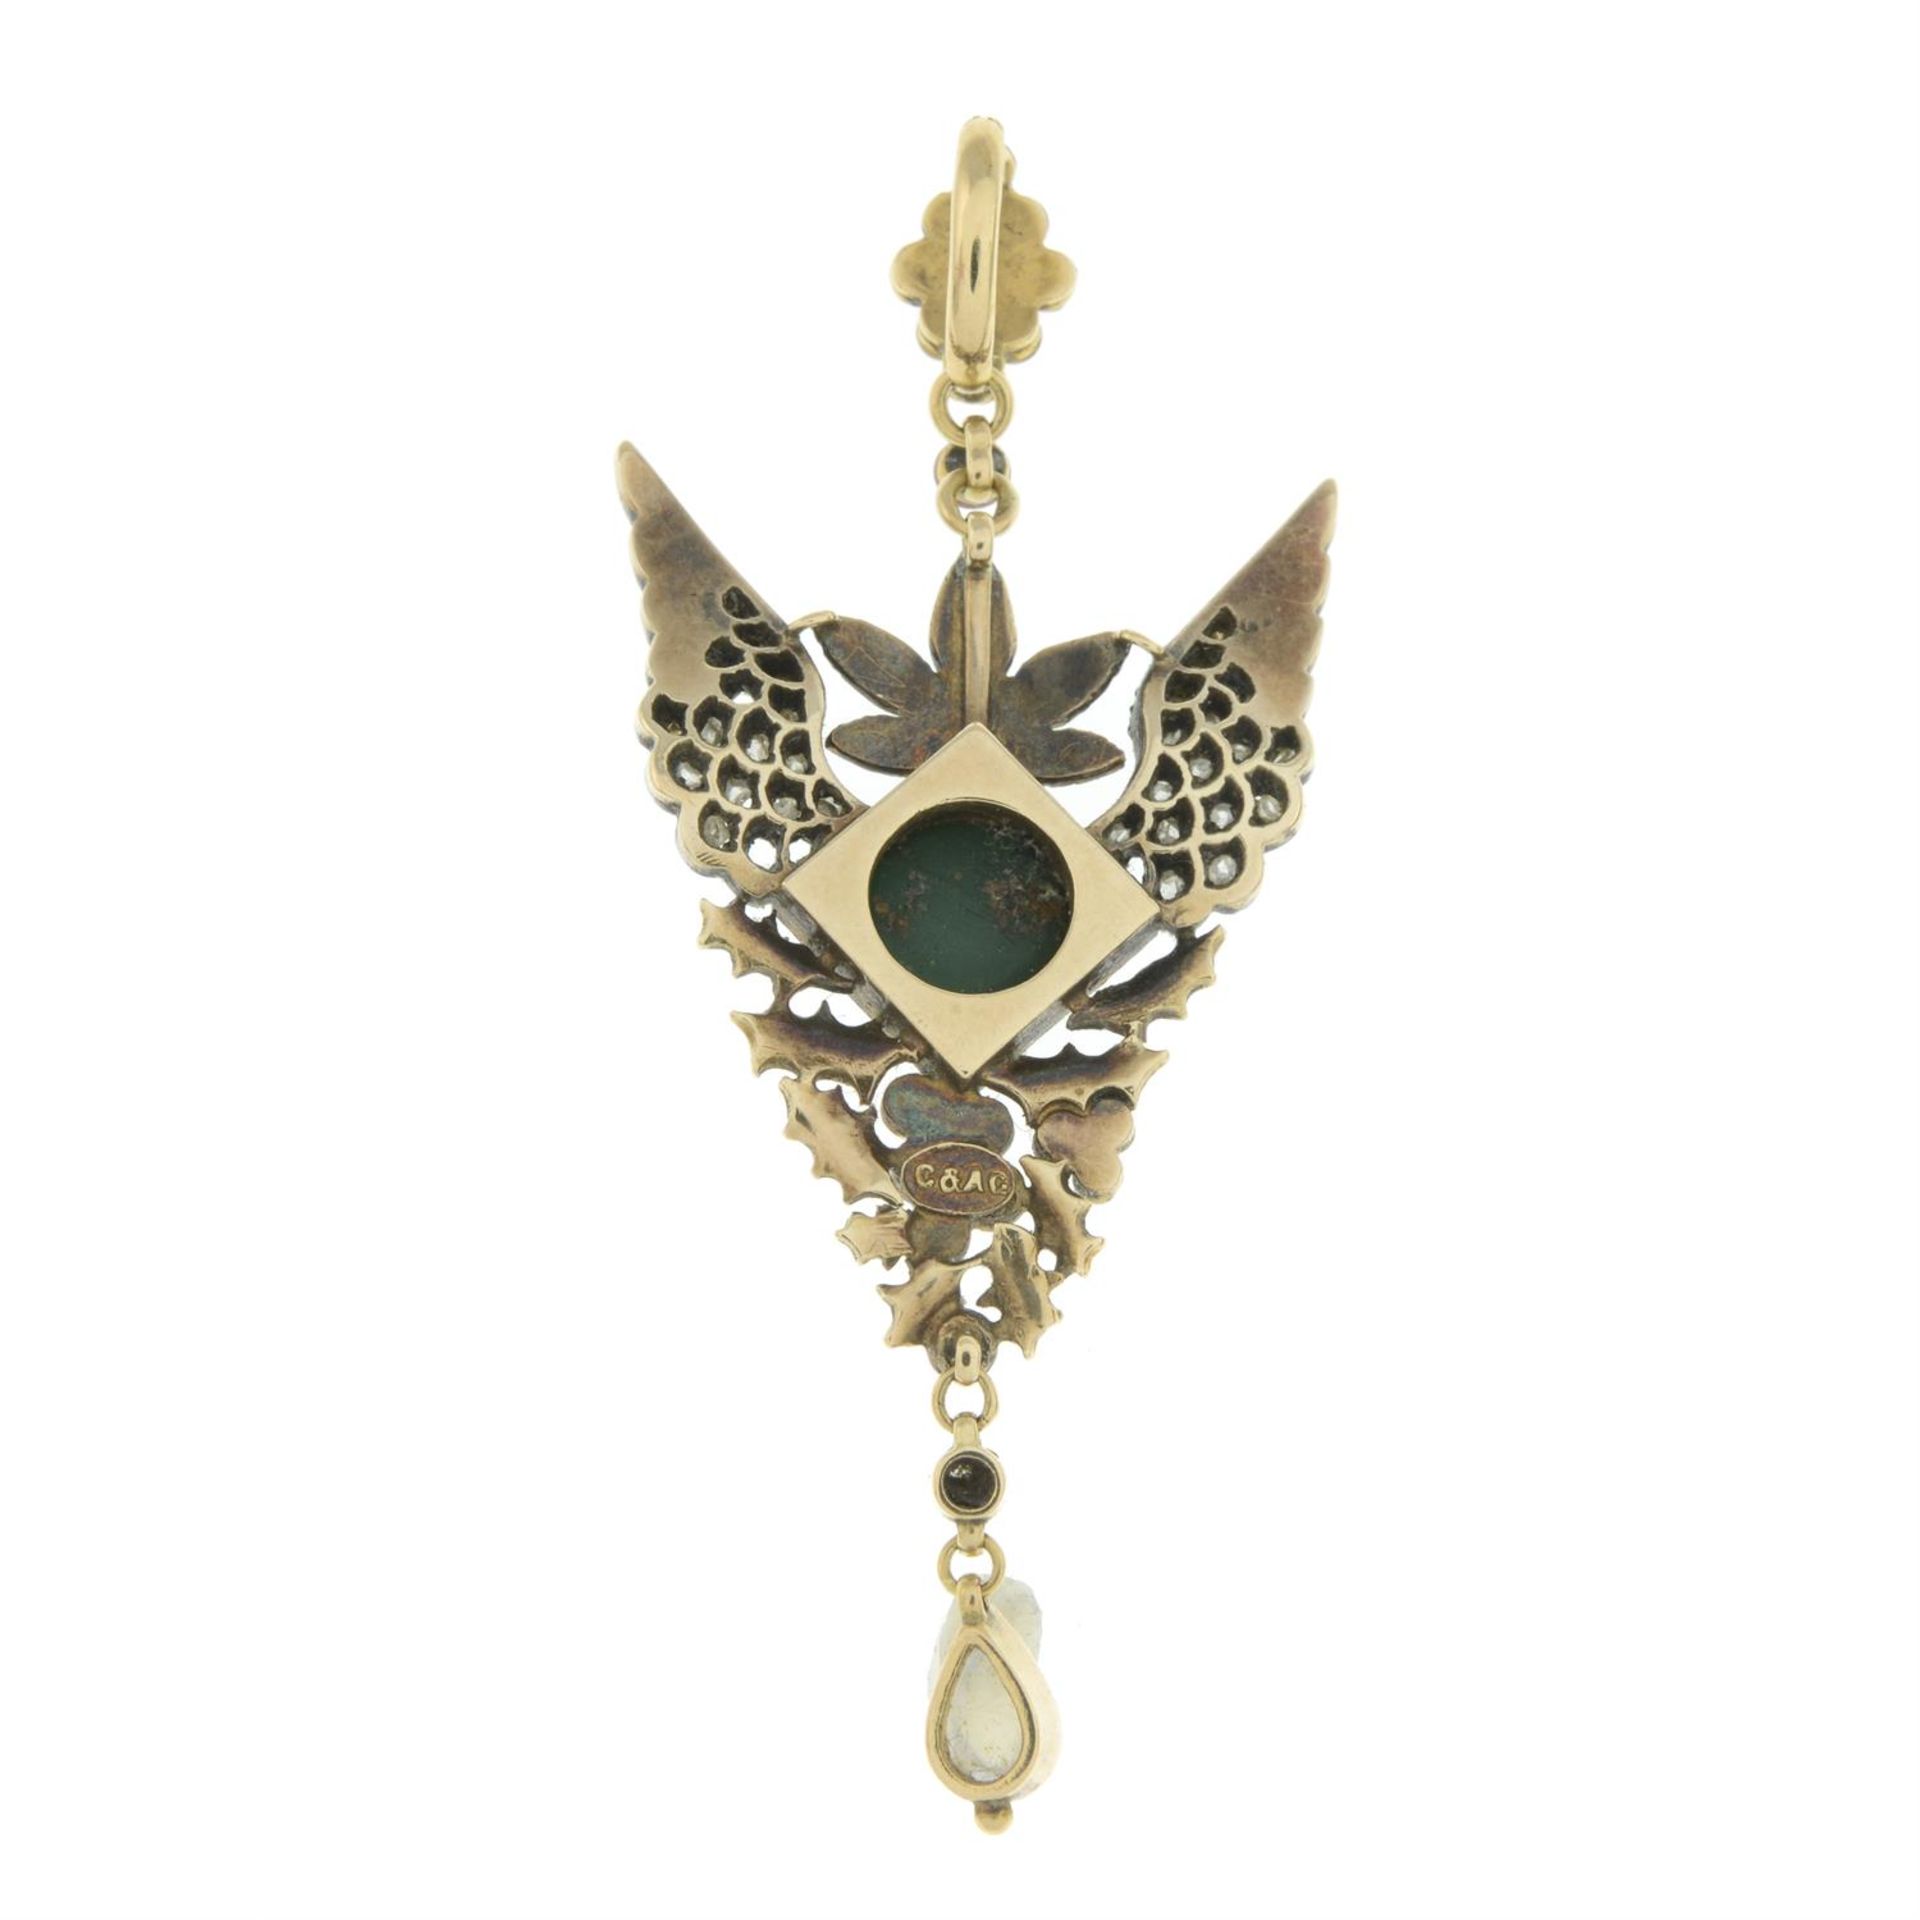 Enamel and gem pendant, by Carlo & Arthur Giuliano - Image 3 of 4